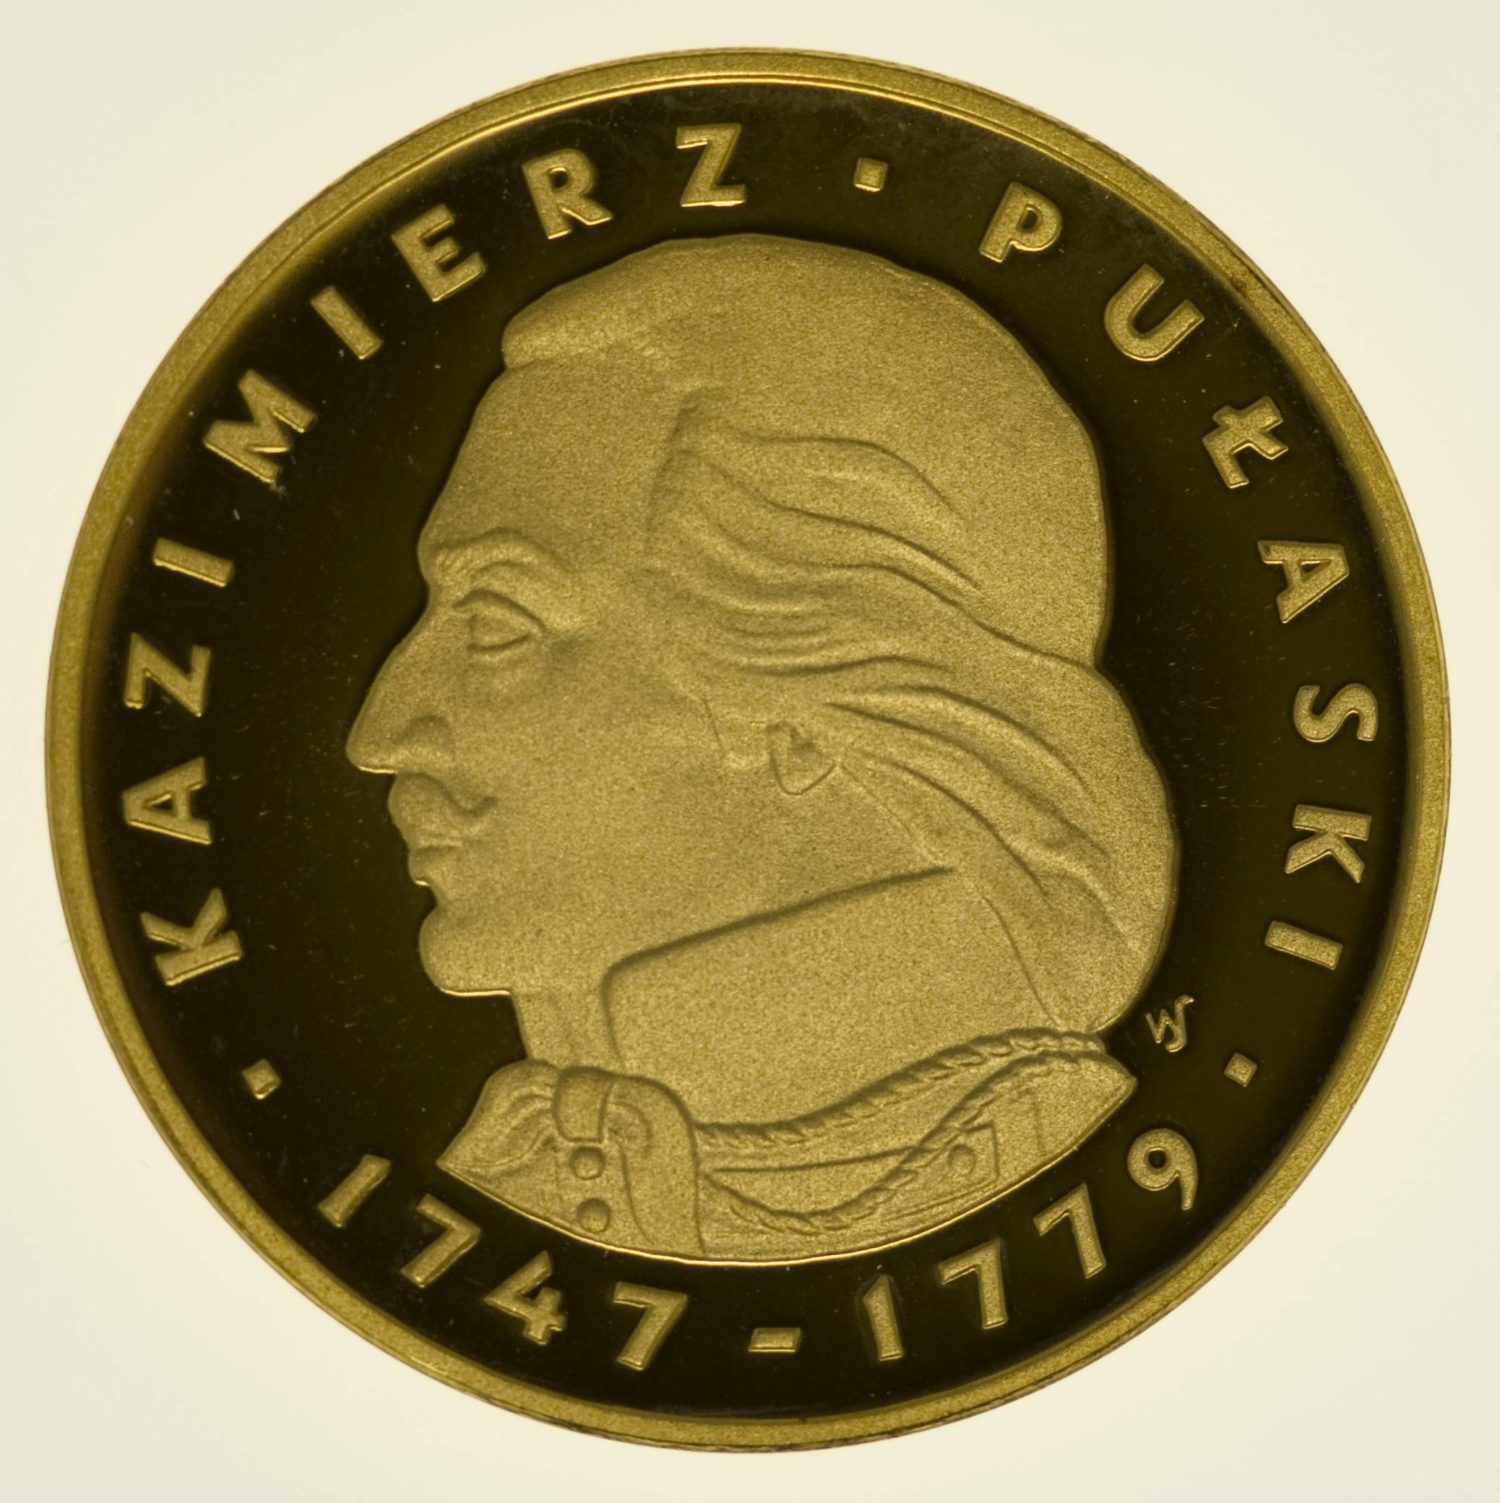 Polen Pulaski 500 Zloty 1976 PP Gold 26,96 Gramm fein RAR